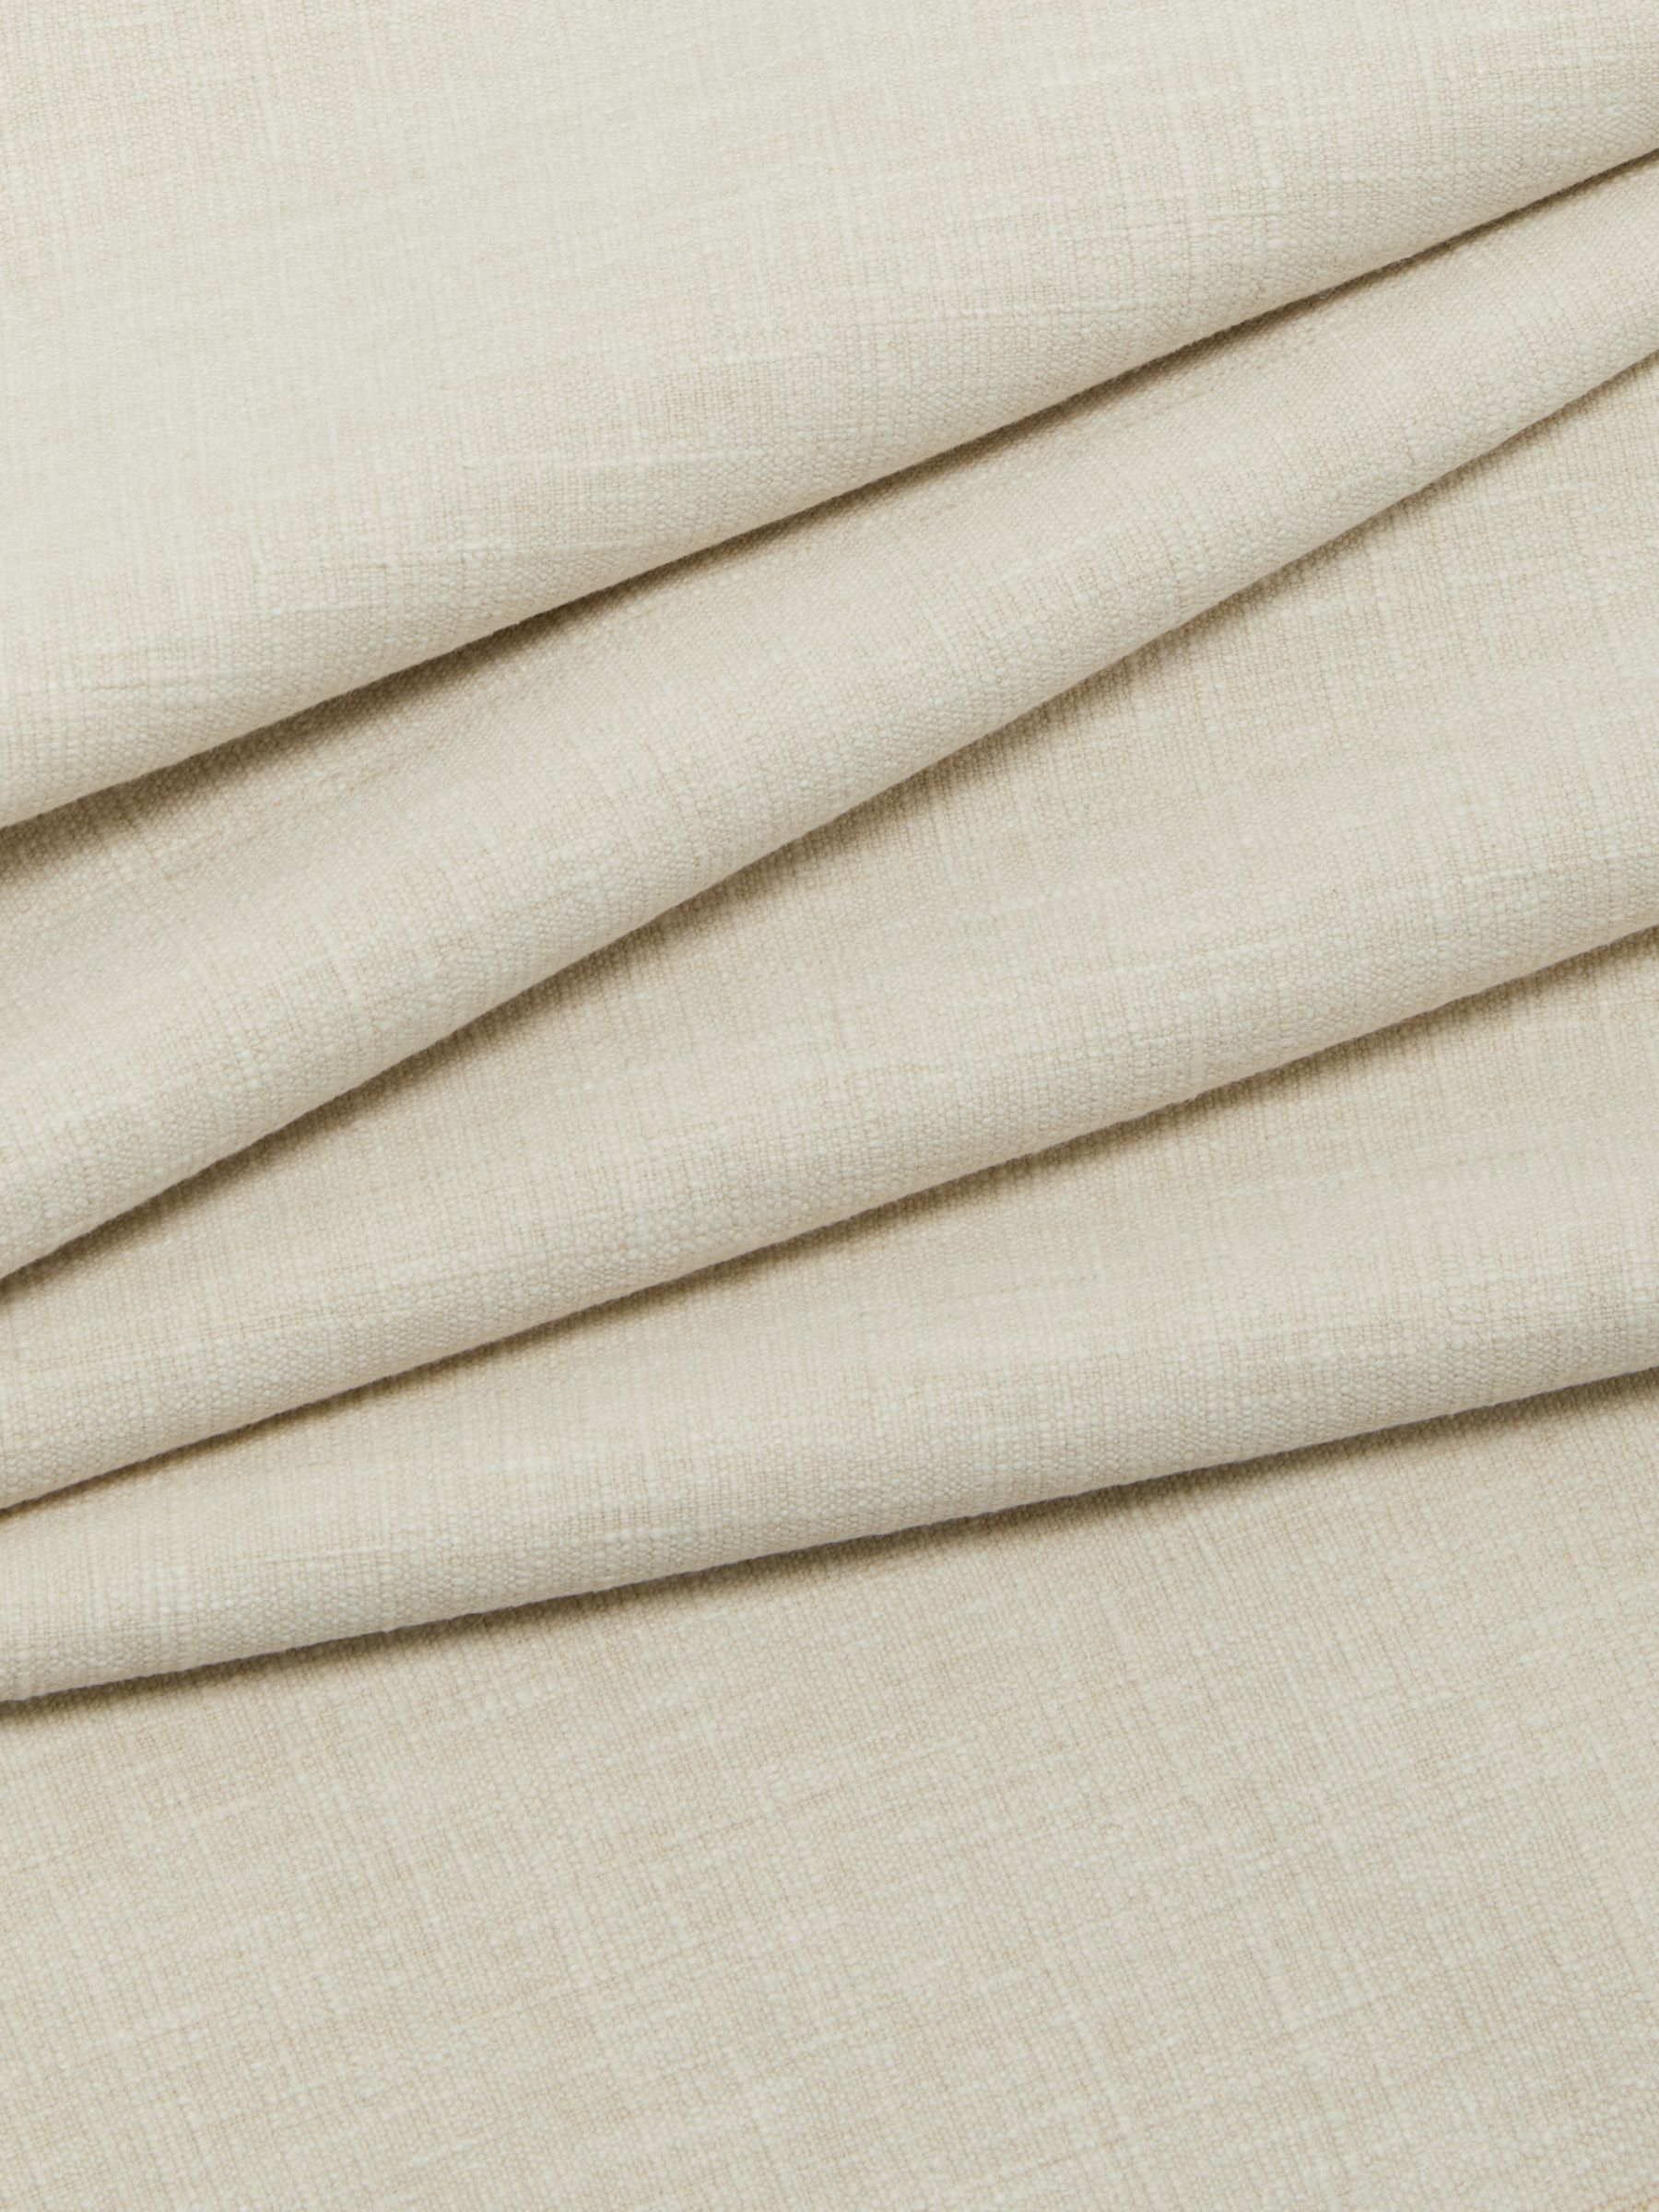 John Lewis Cotton Blend Furnishing Fabric, Parchment